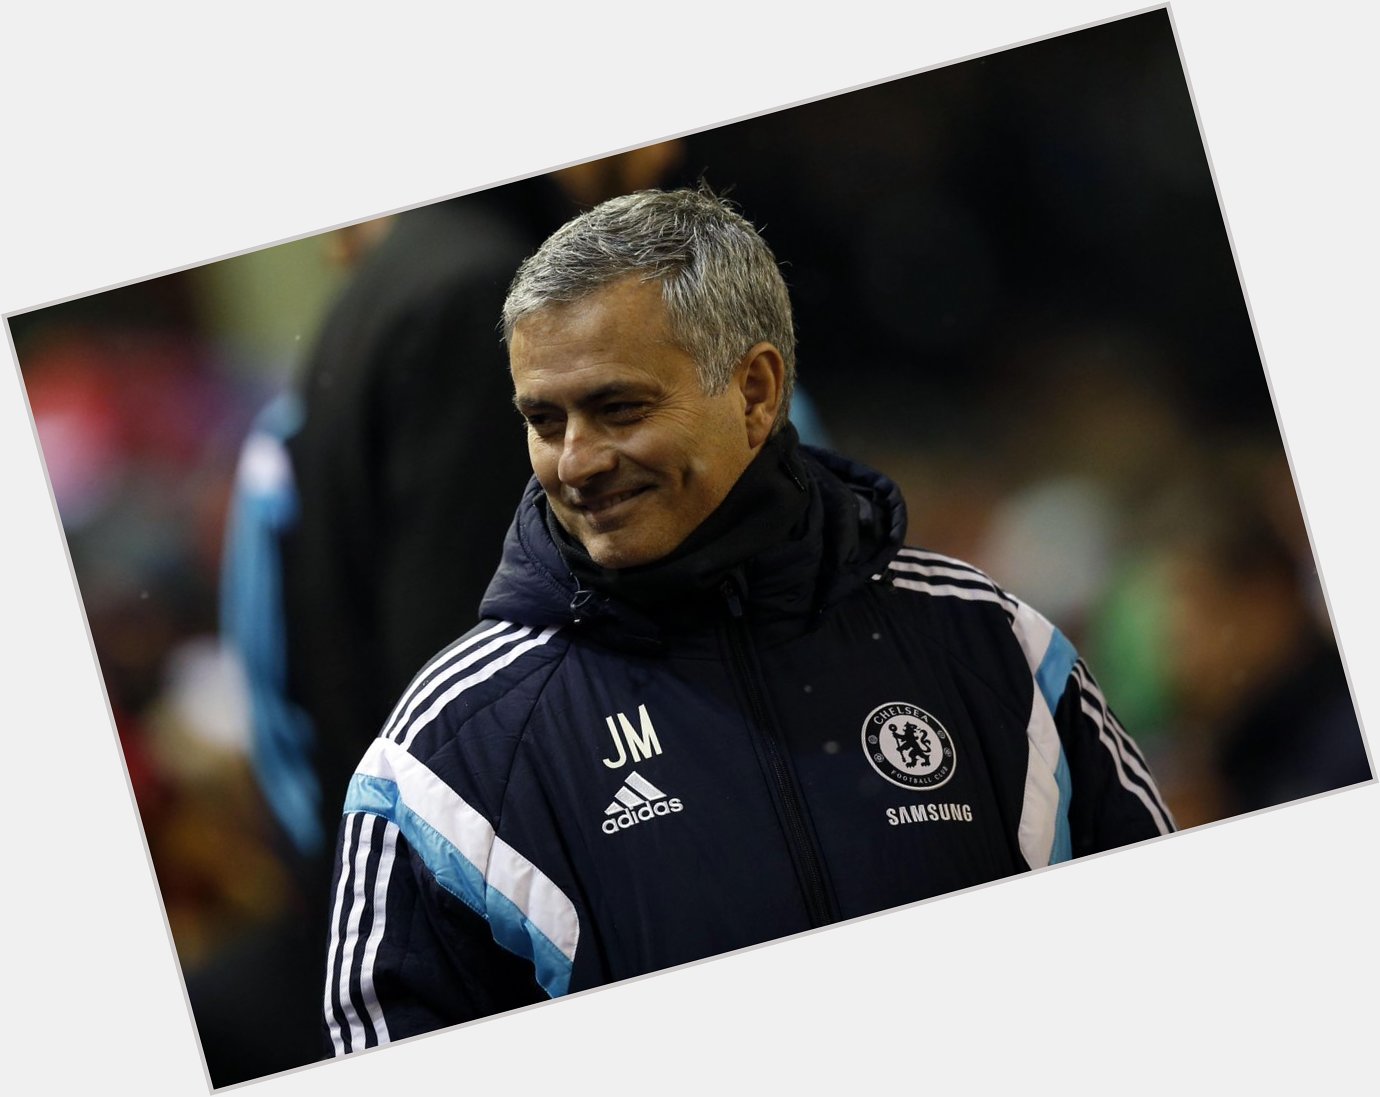 Happy birthday to Jose Mourinho! 